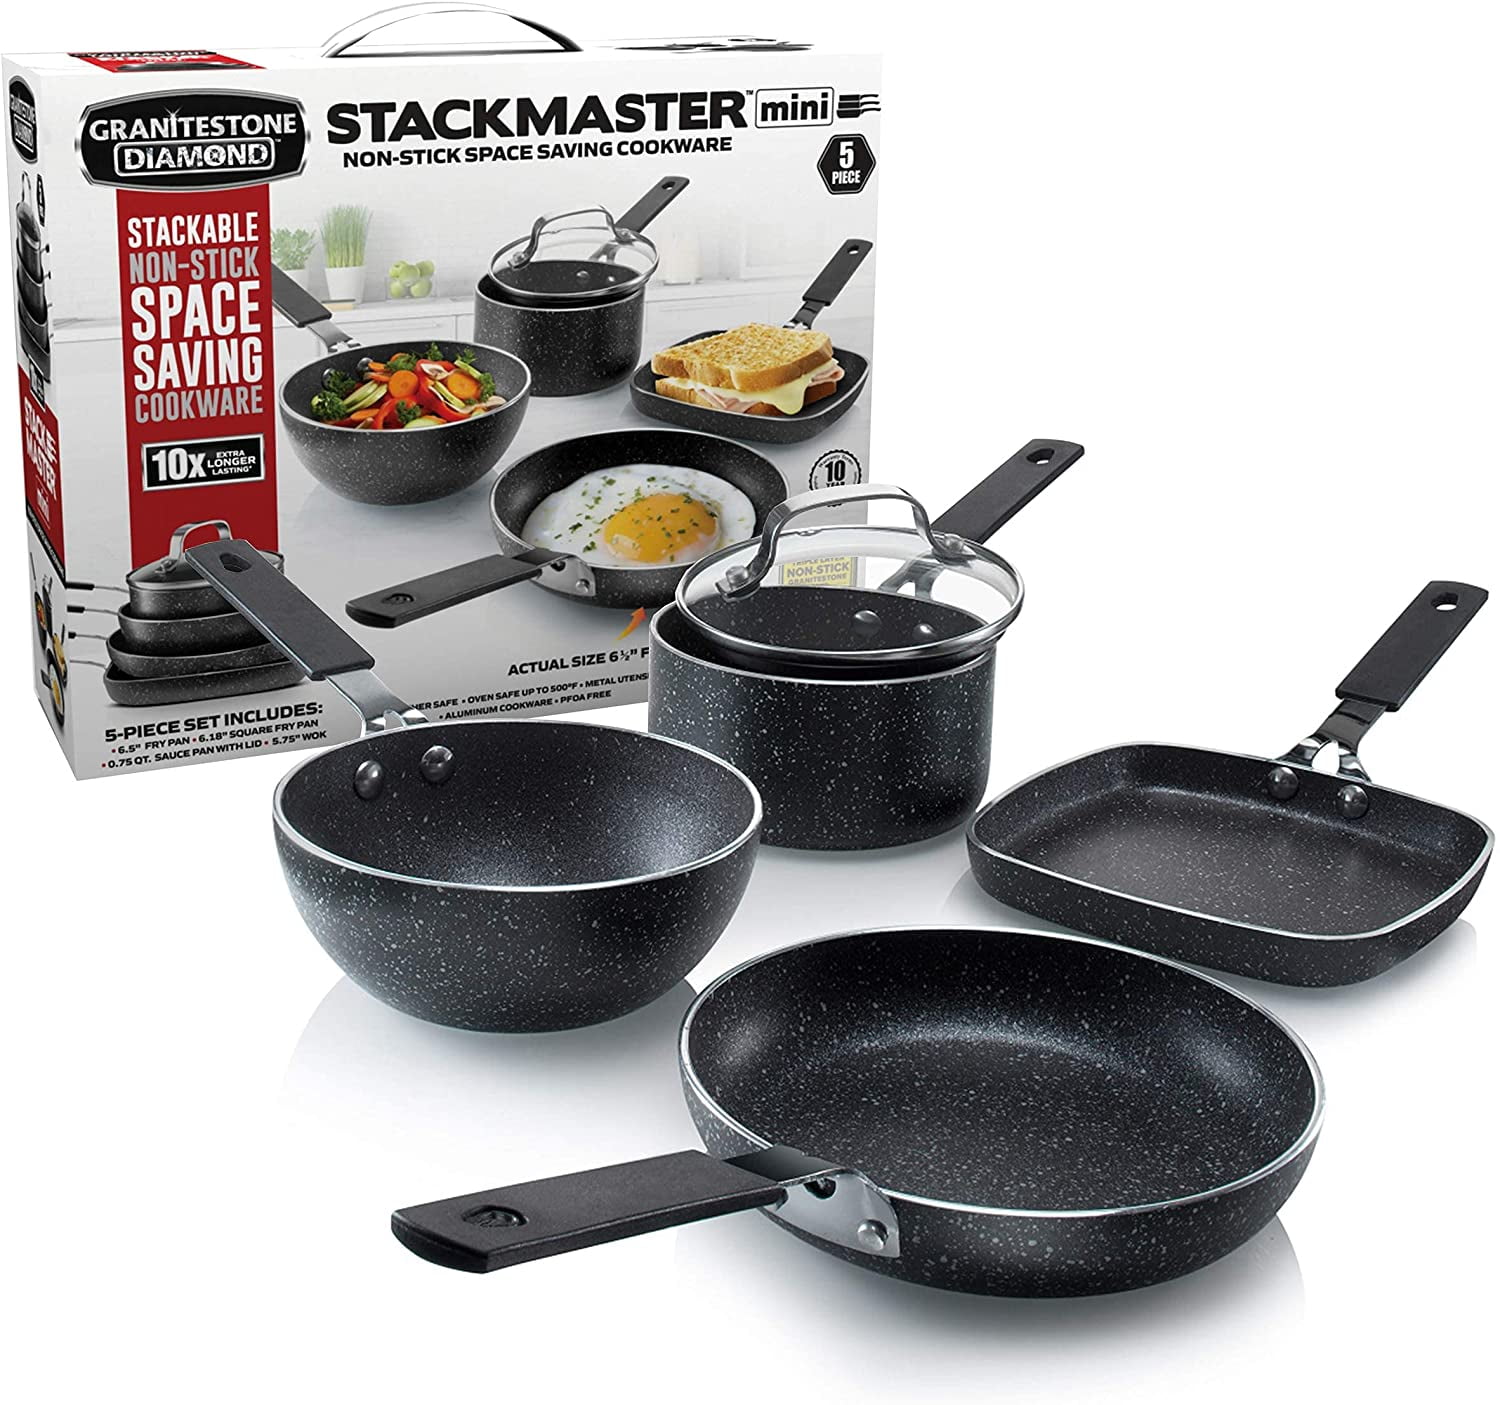 Granitestone 5 Piece Mini Stackmaster Cookware Set 